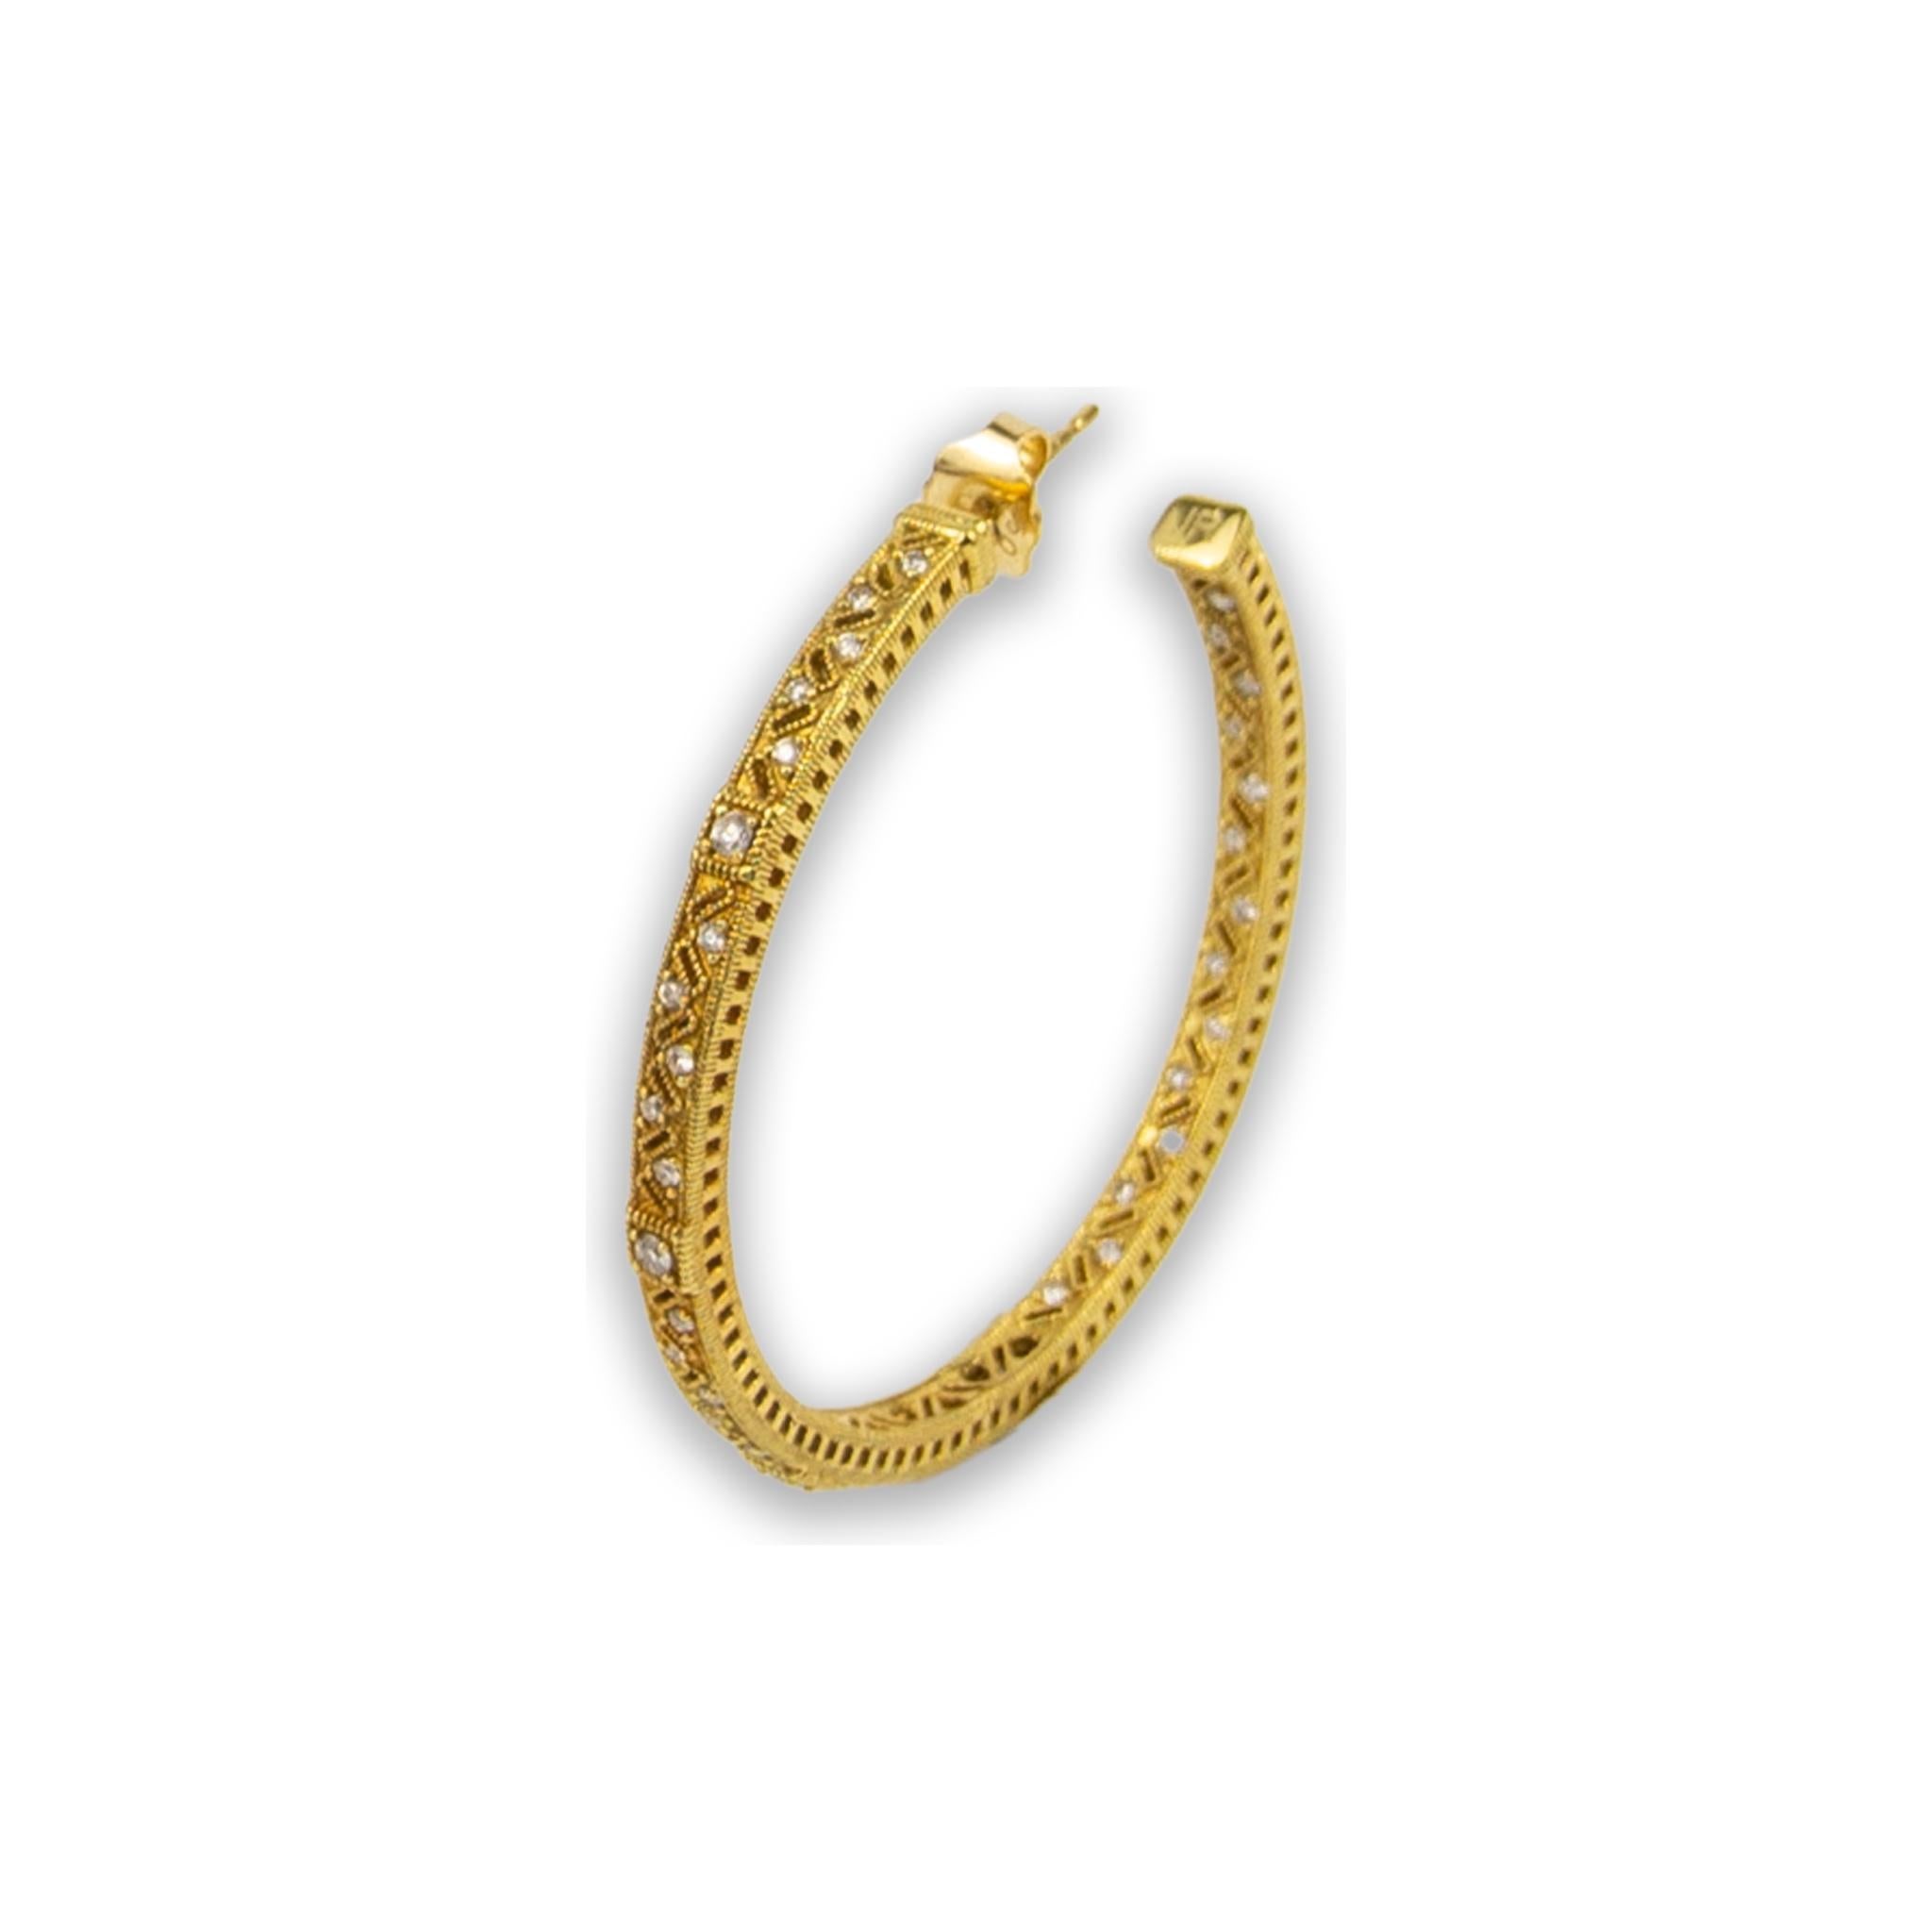 Judith Ripka Diamond Hoop Earrings
18K Yellow Gold
Diamonds: 0.67ctw
SKU: JR01034
Retail price: $7,140.00